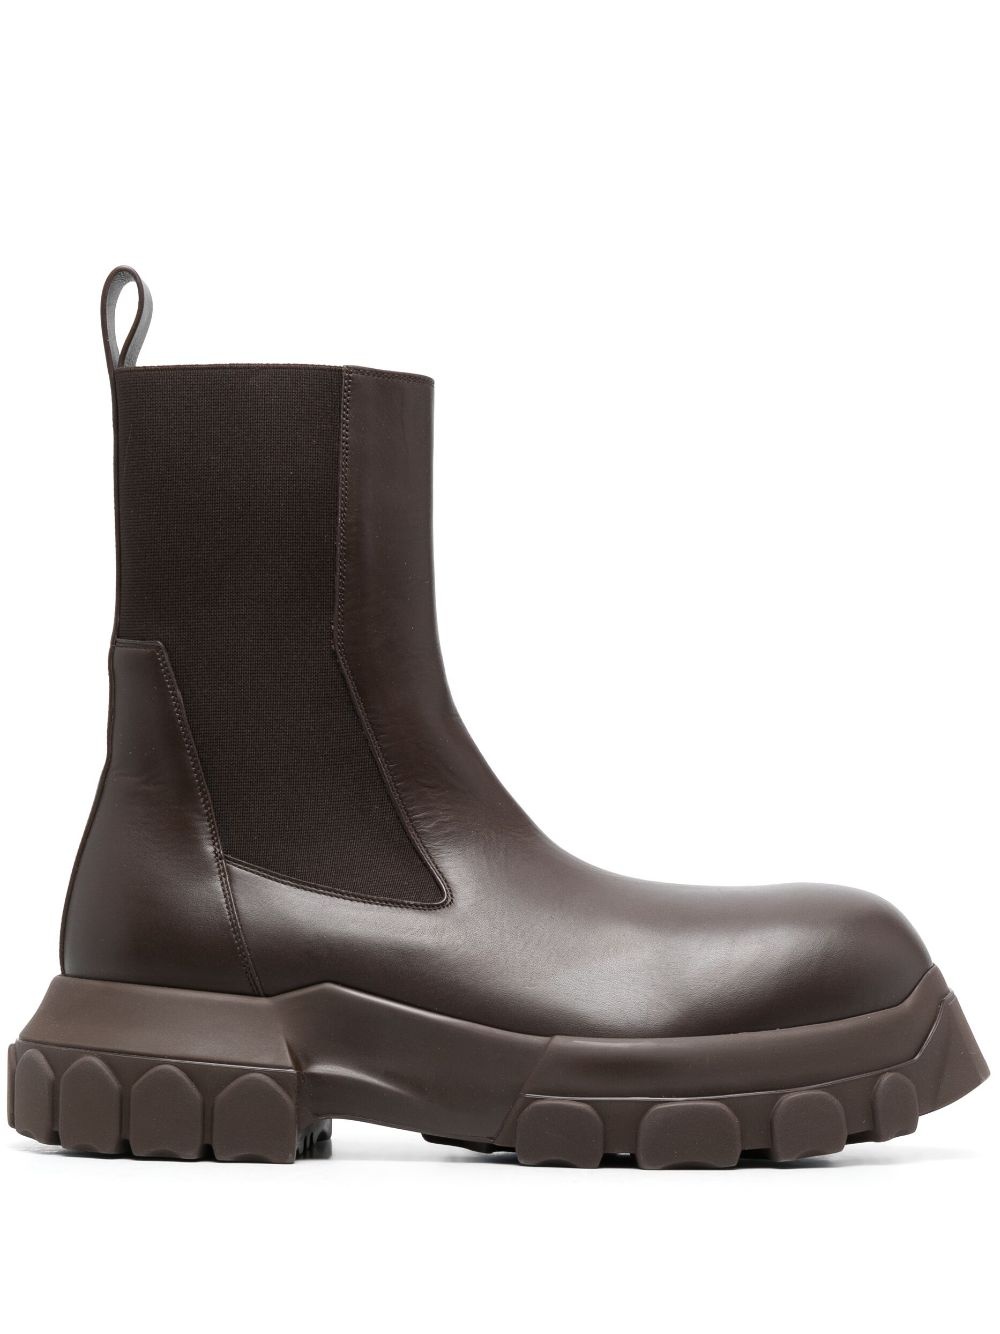 Edfu leather track boots - 1